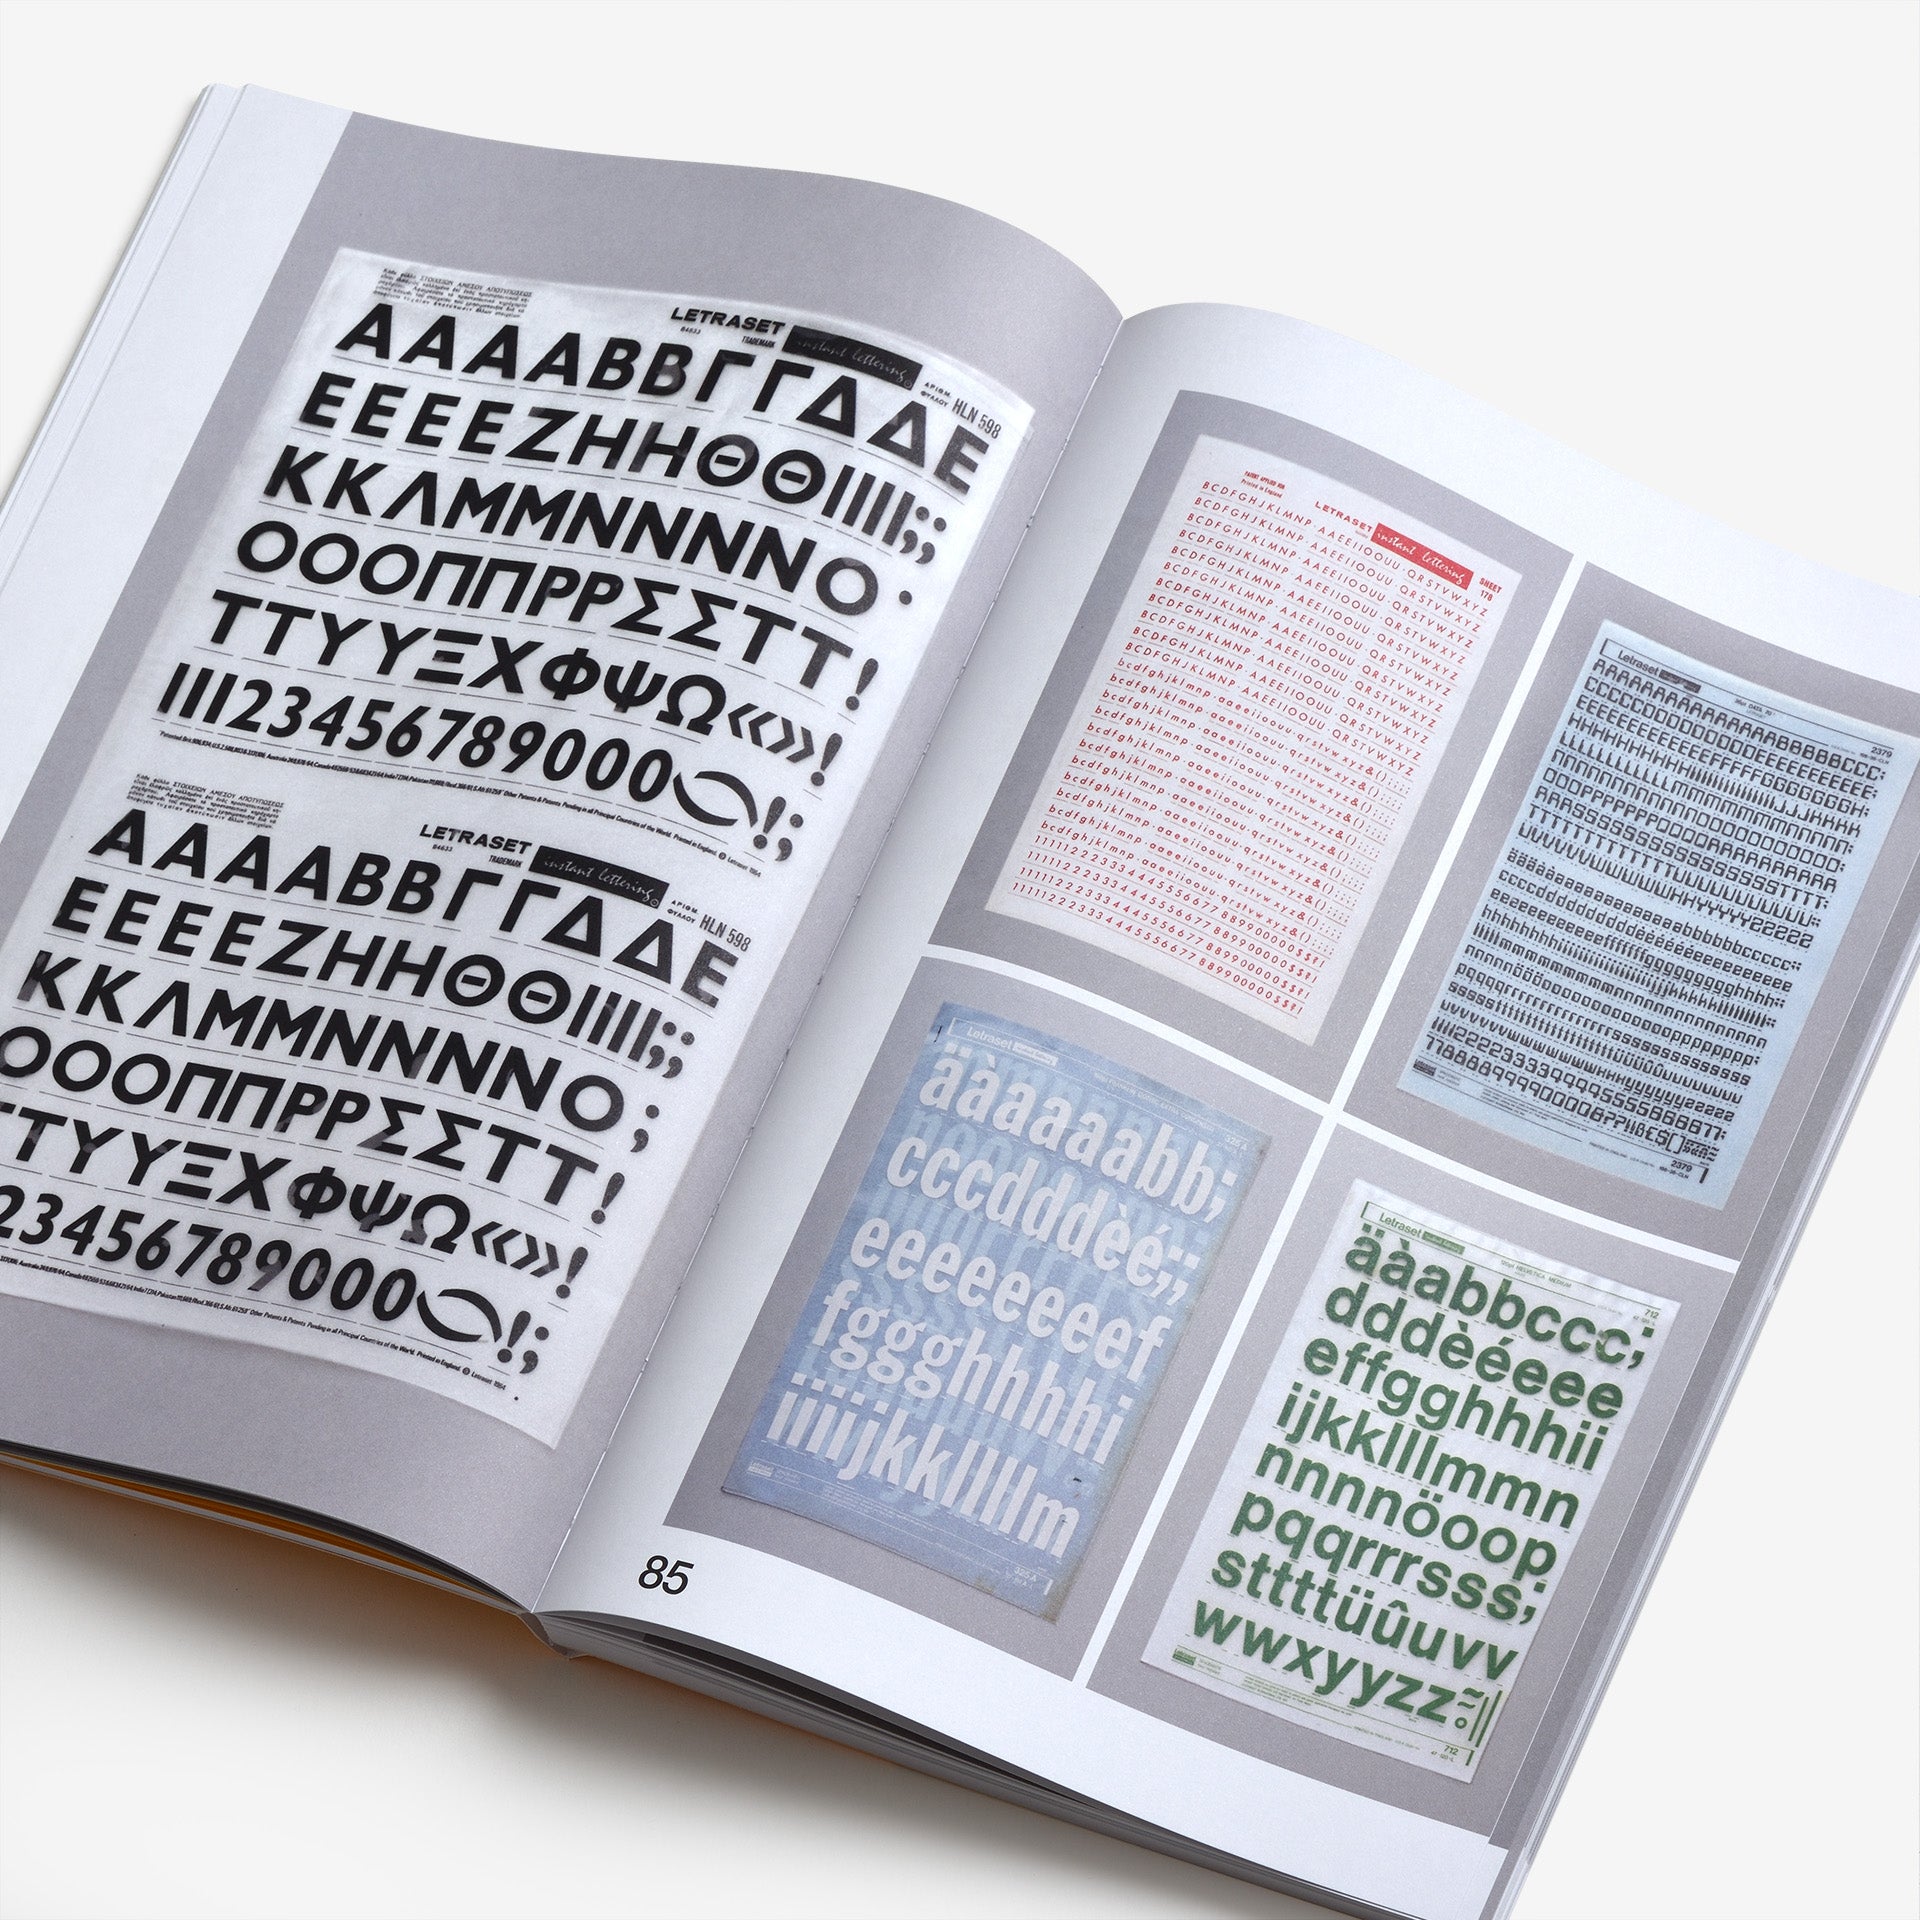 Letraset: The DIY Typography Revolution